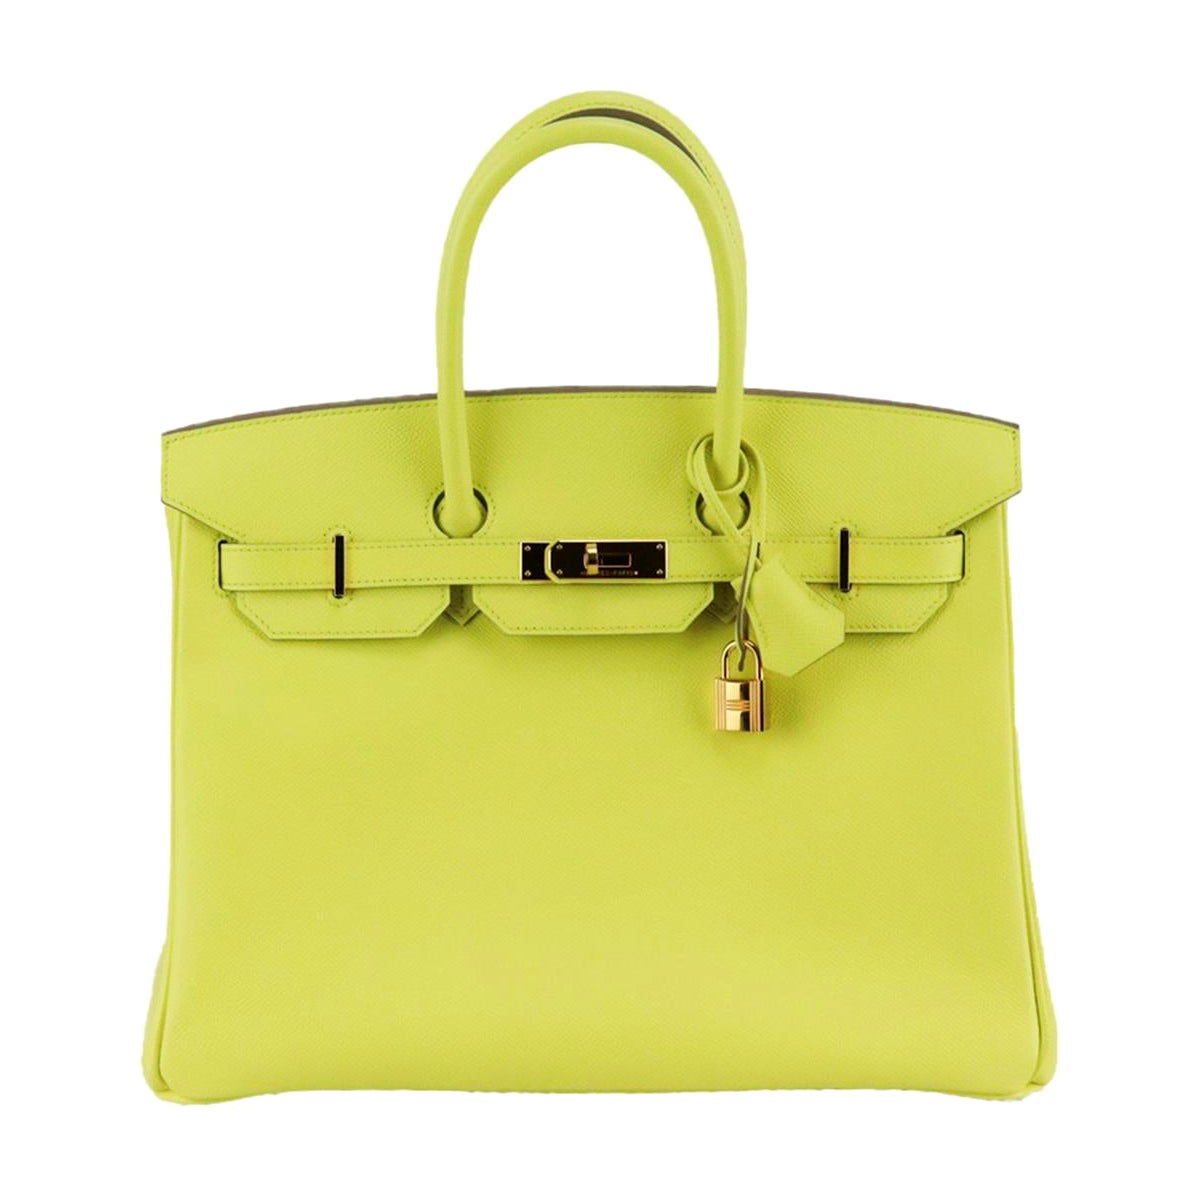 Hermès 2011 Birkin 35cm Epsom Leather Bag For Sale